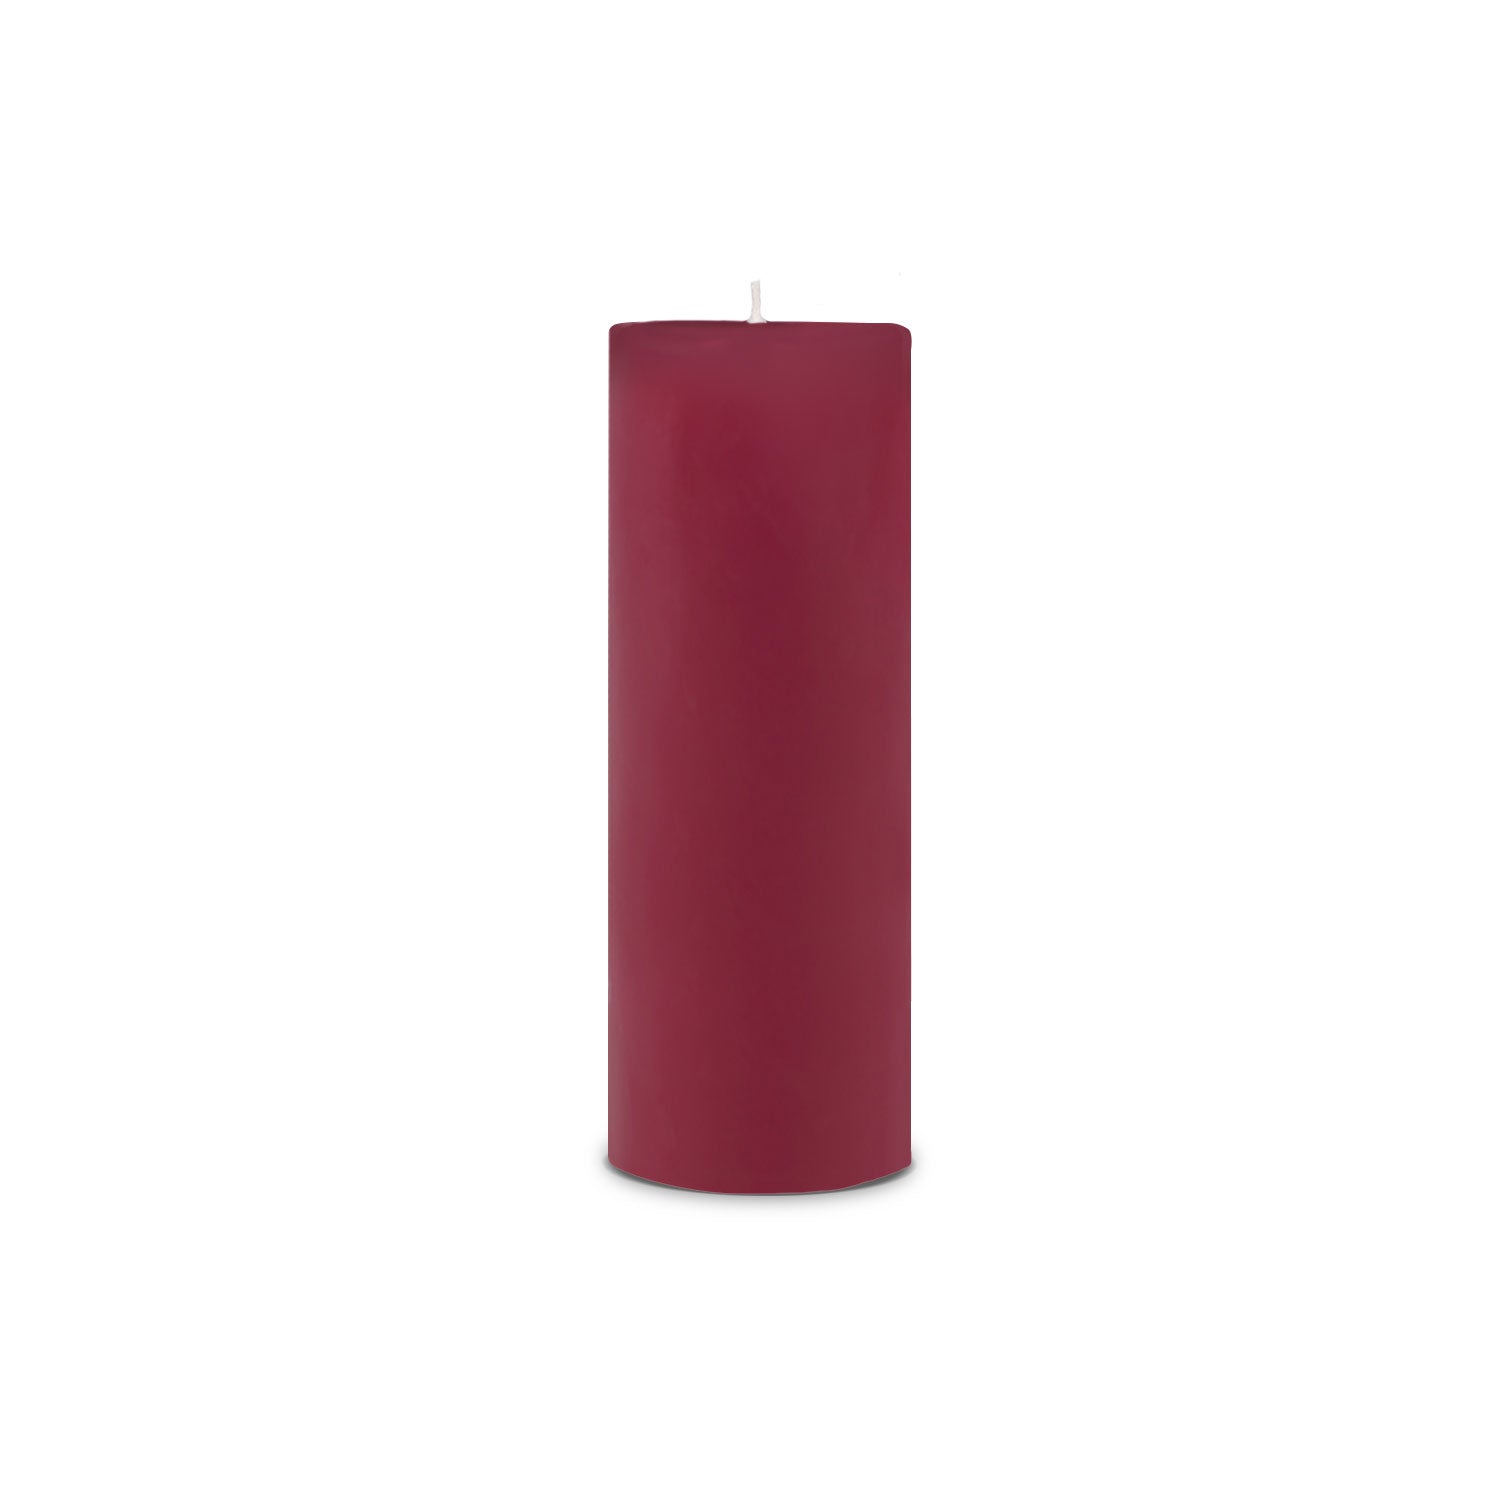 2"x6" Petite Pillar Candle - red